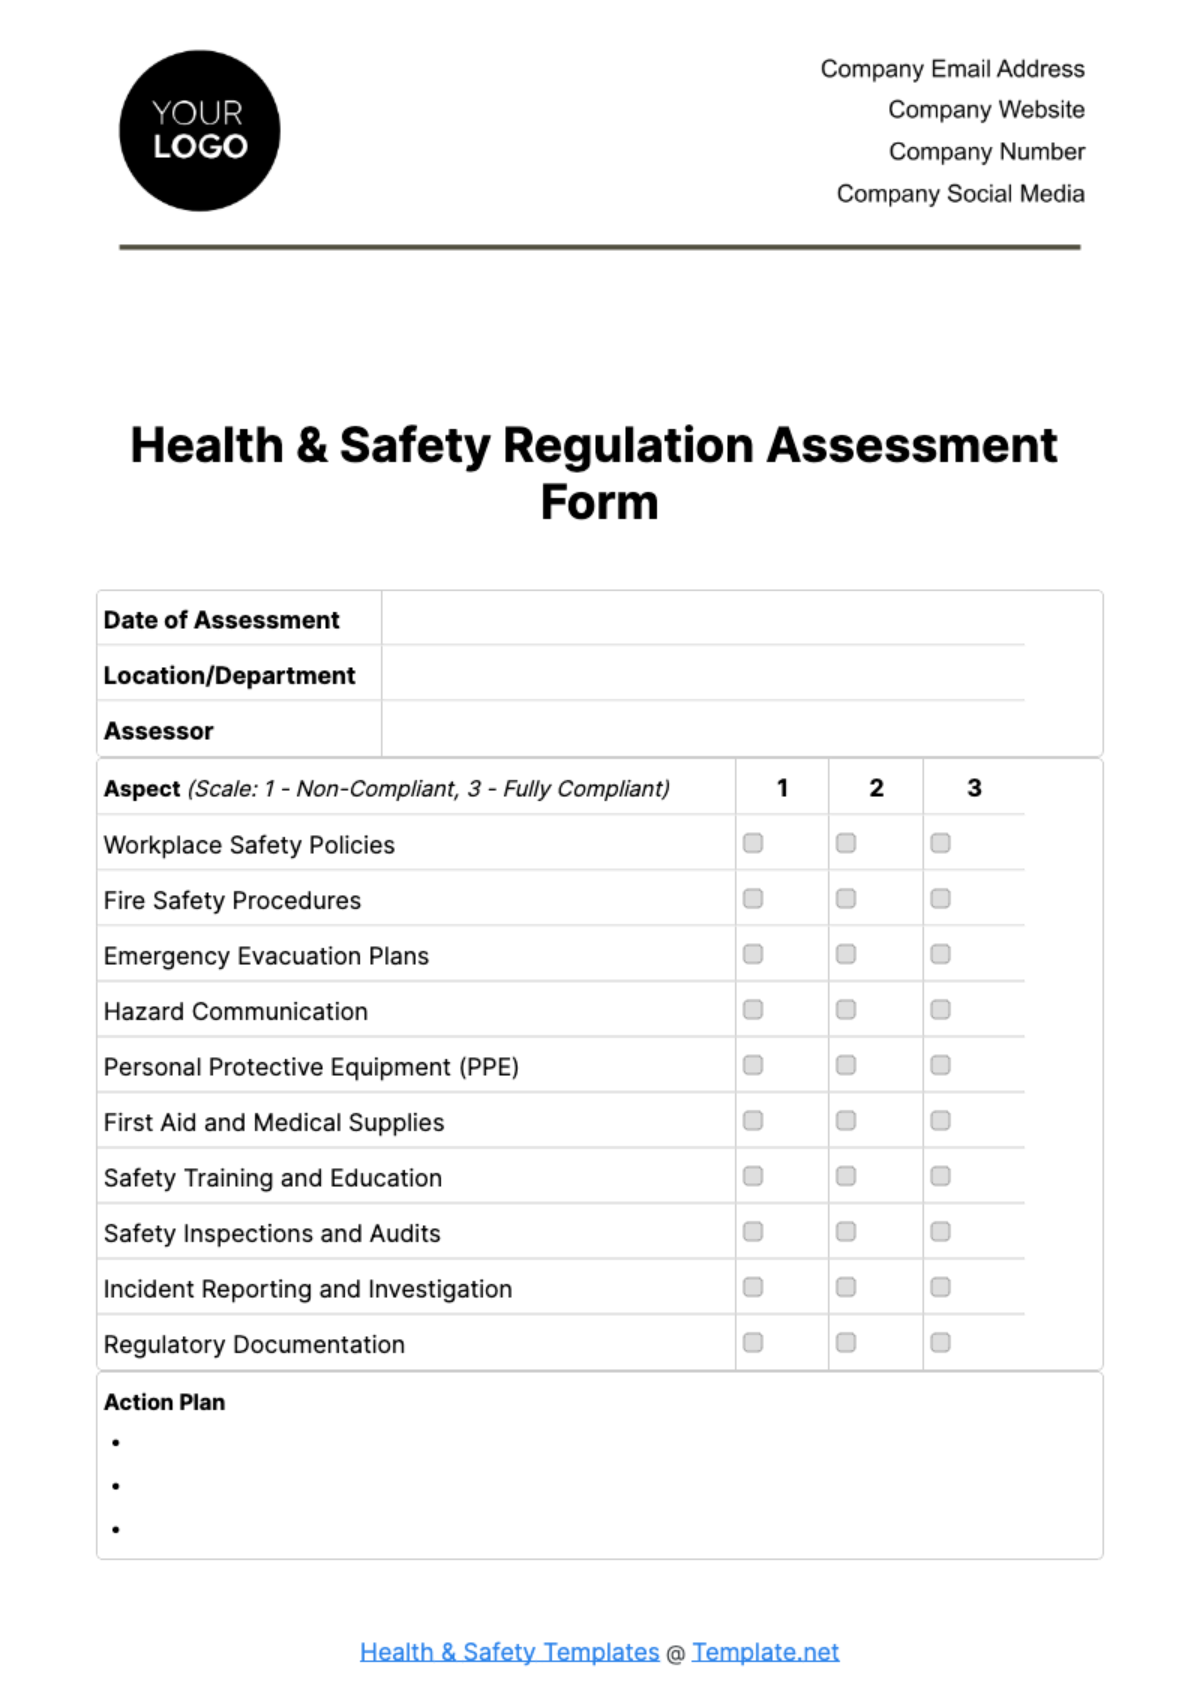 Health & Safety Regulation Assessment Form Template